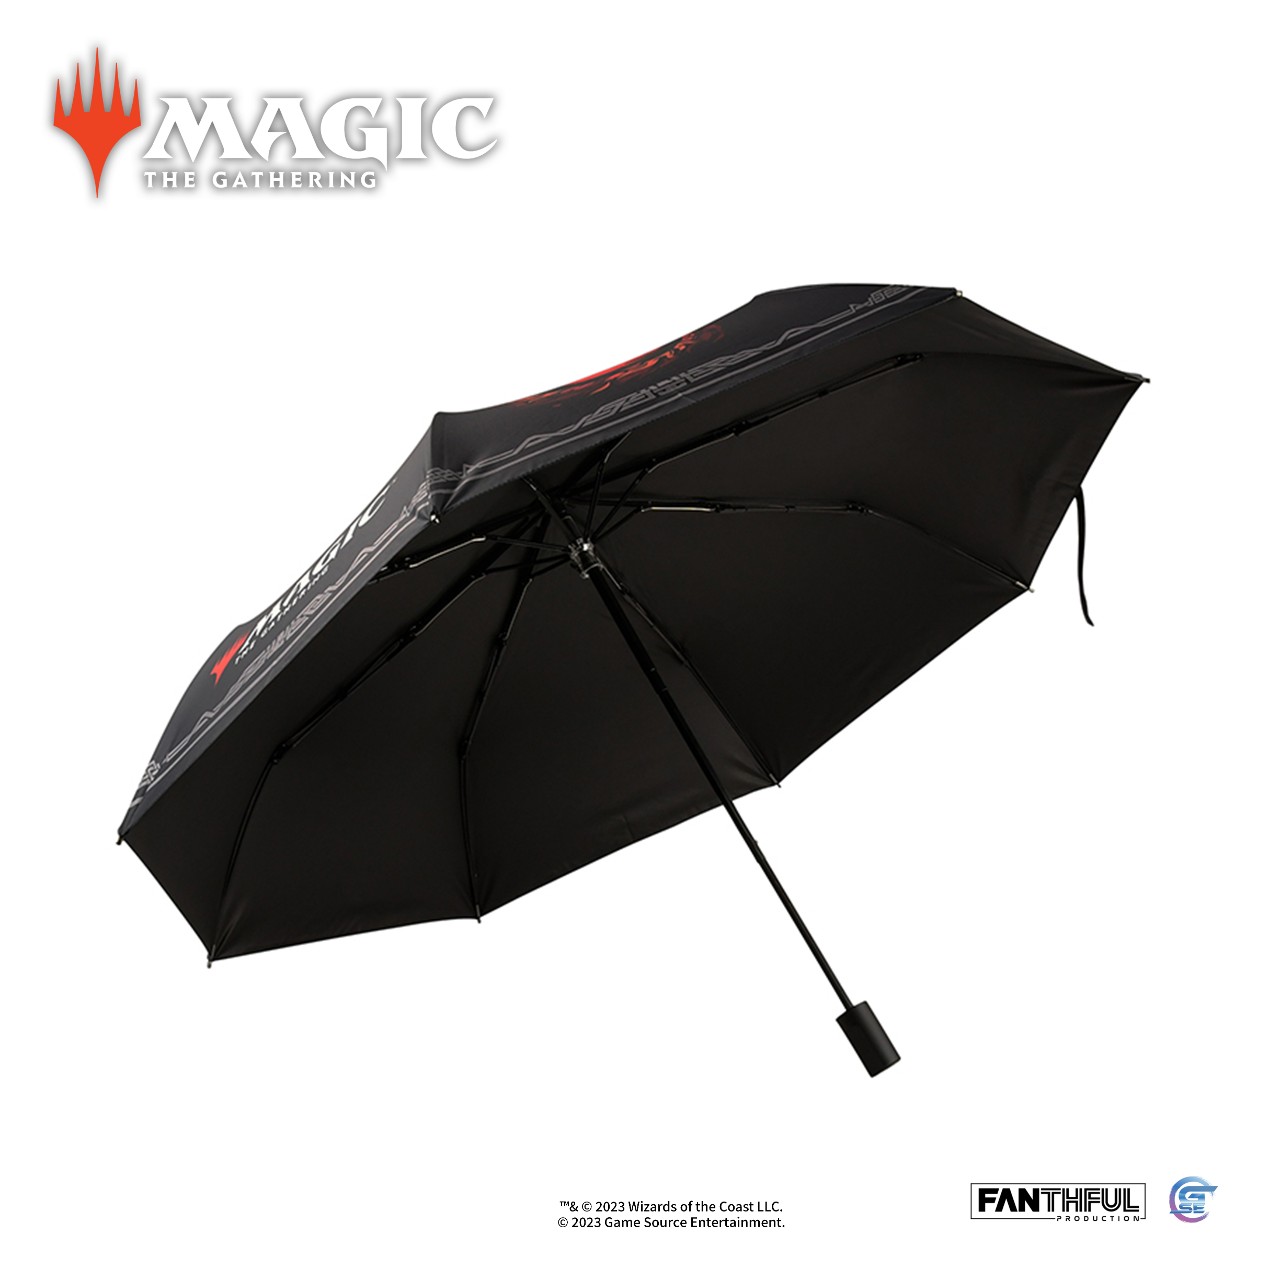 Magic The Gathering_product shot_umbrella_02